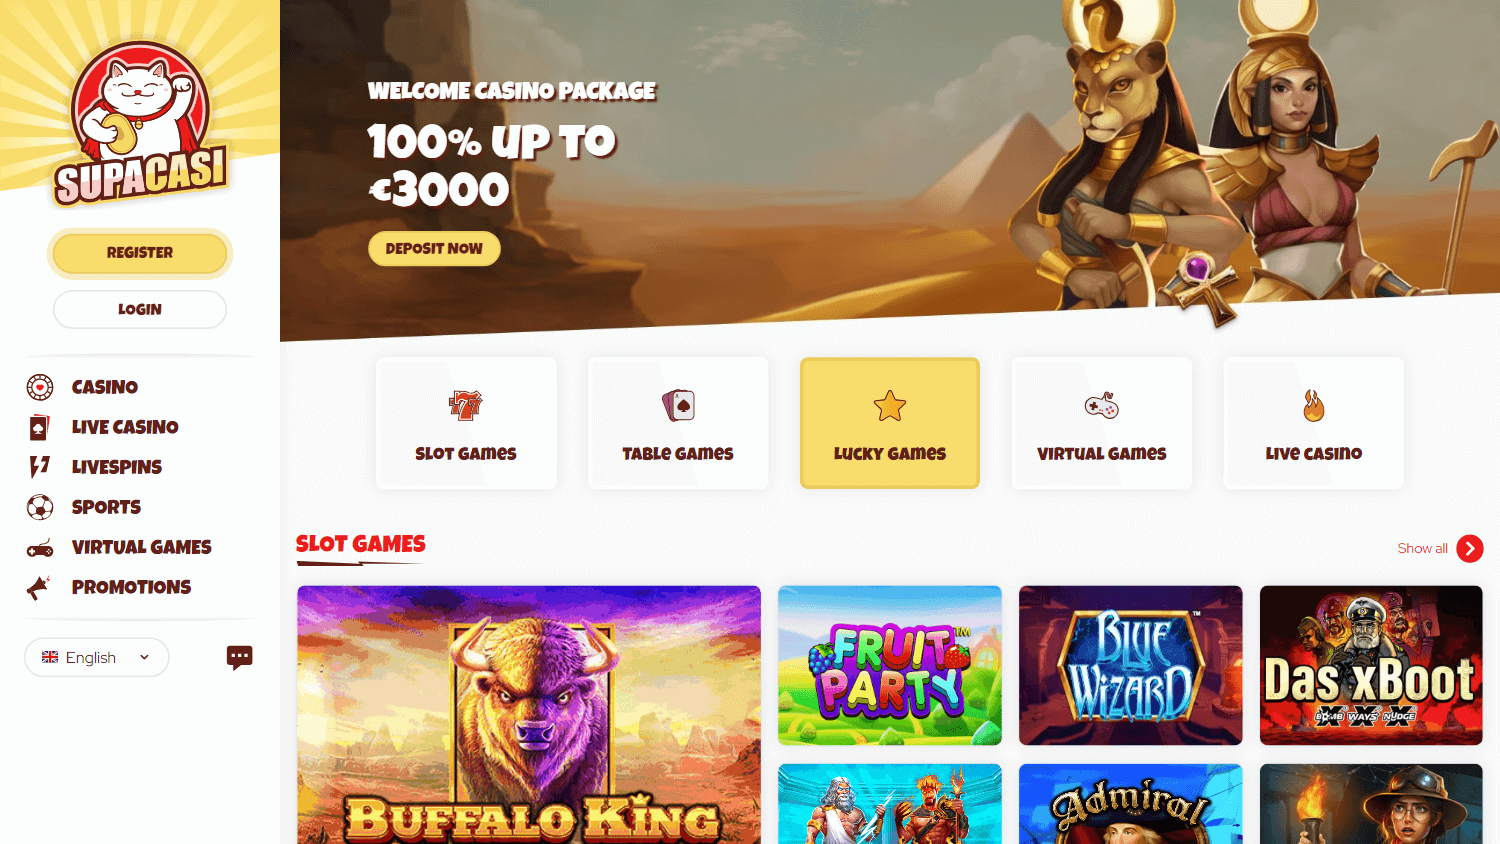 supacasi_casino_homepage_desktop